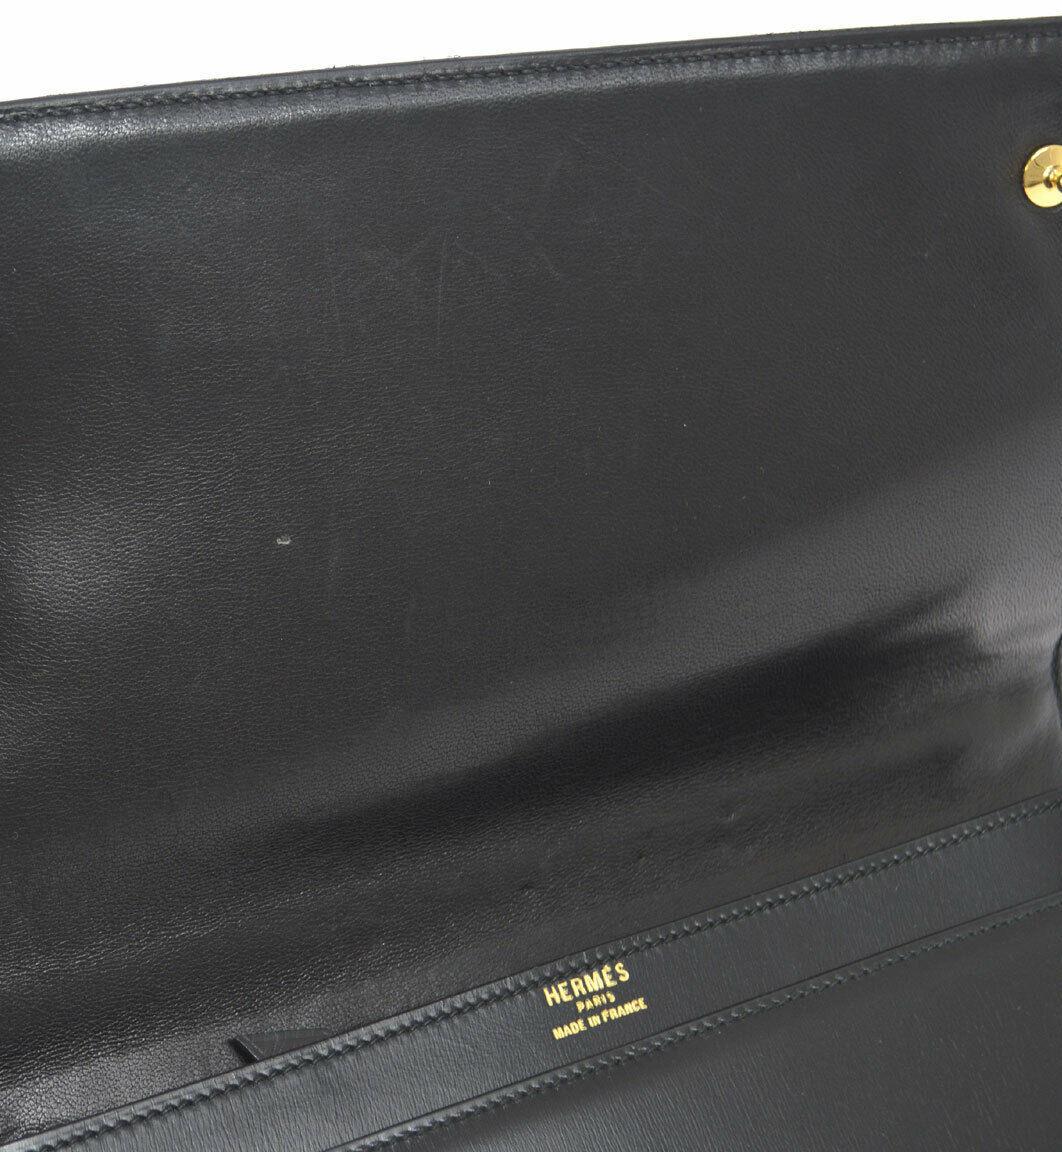 Hermes Black Leather Gold Emblem Evening Clutch Top Handle Satchel Flap Bag 5